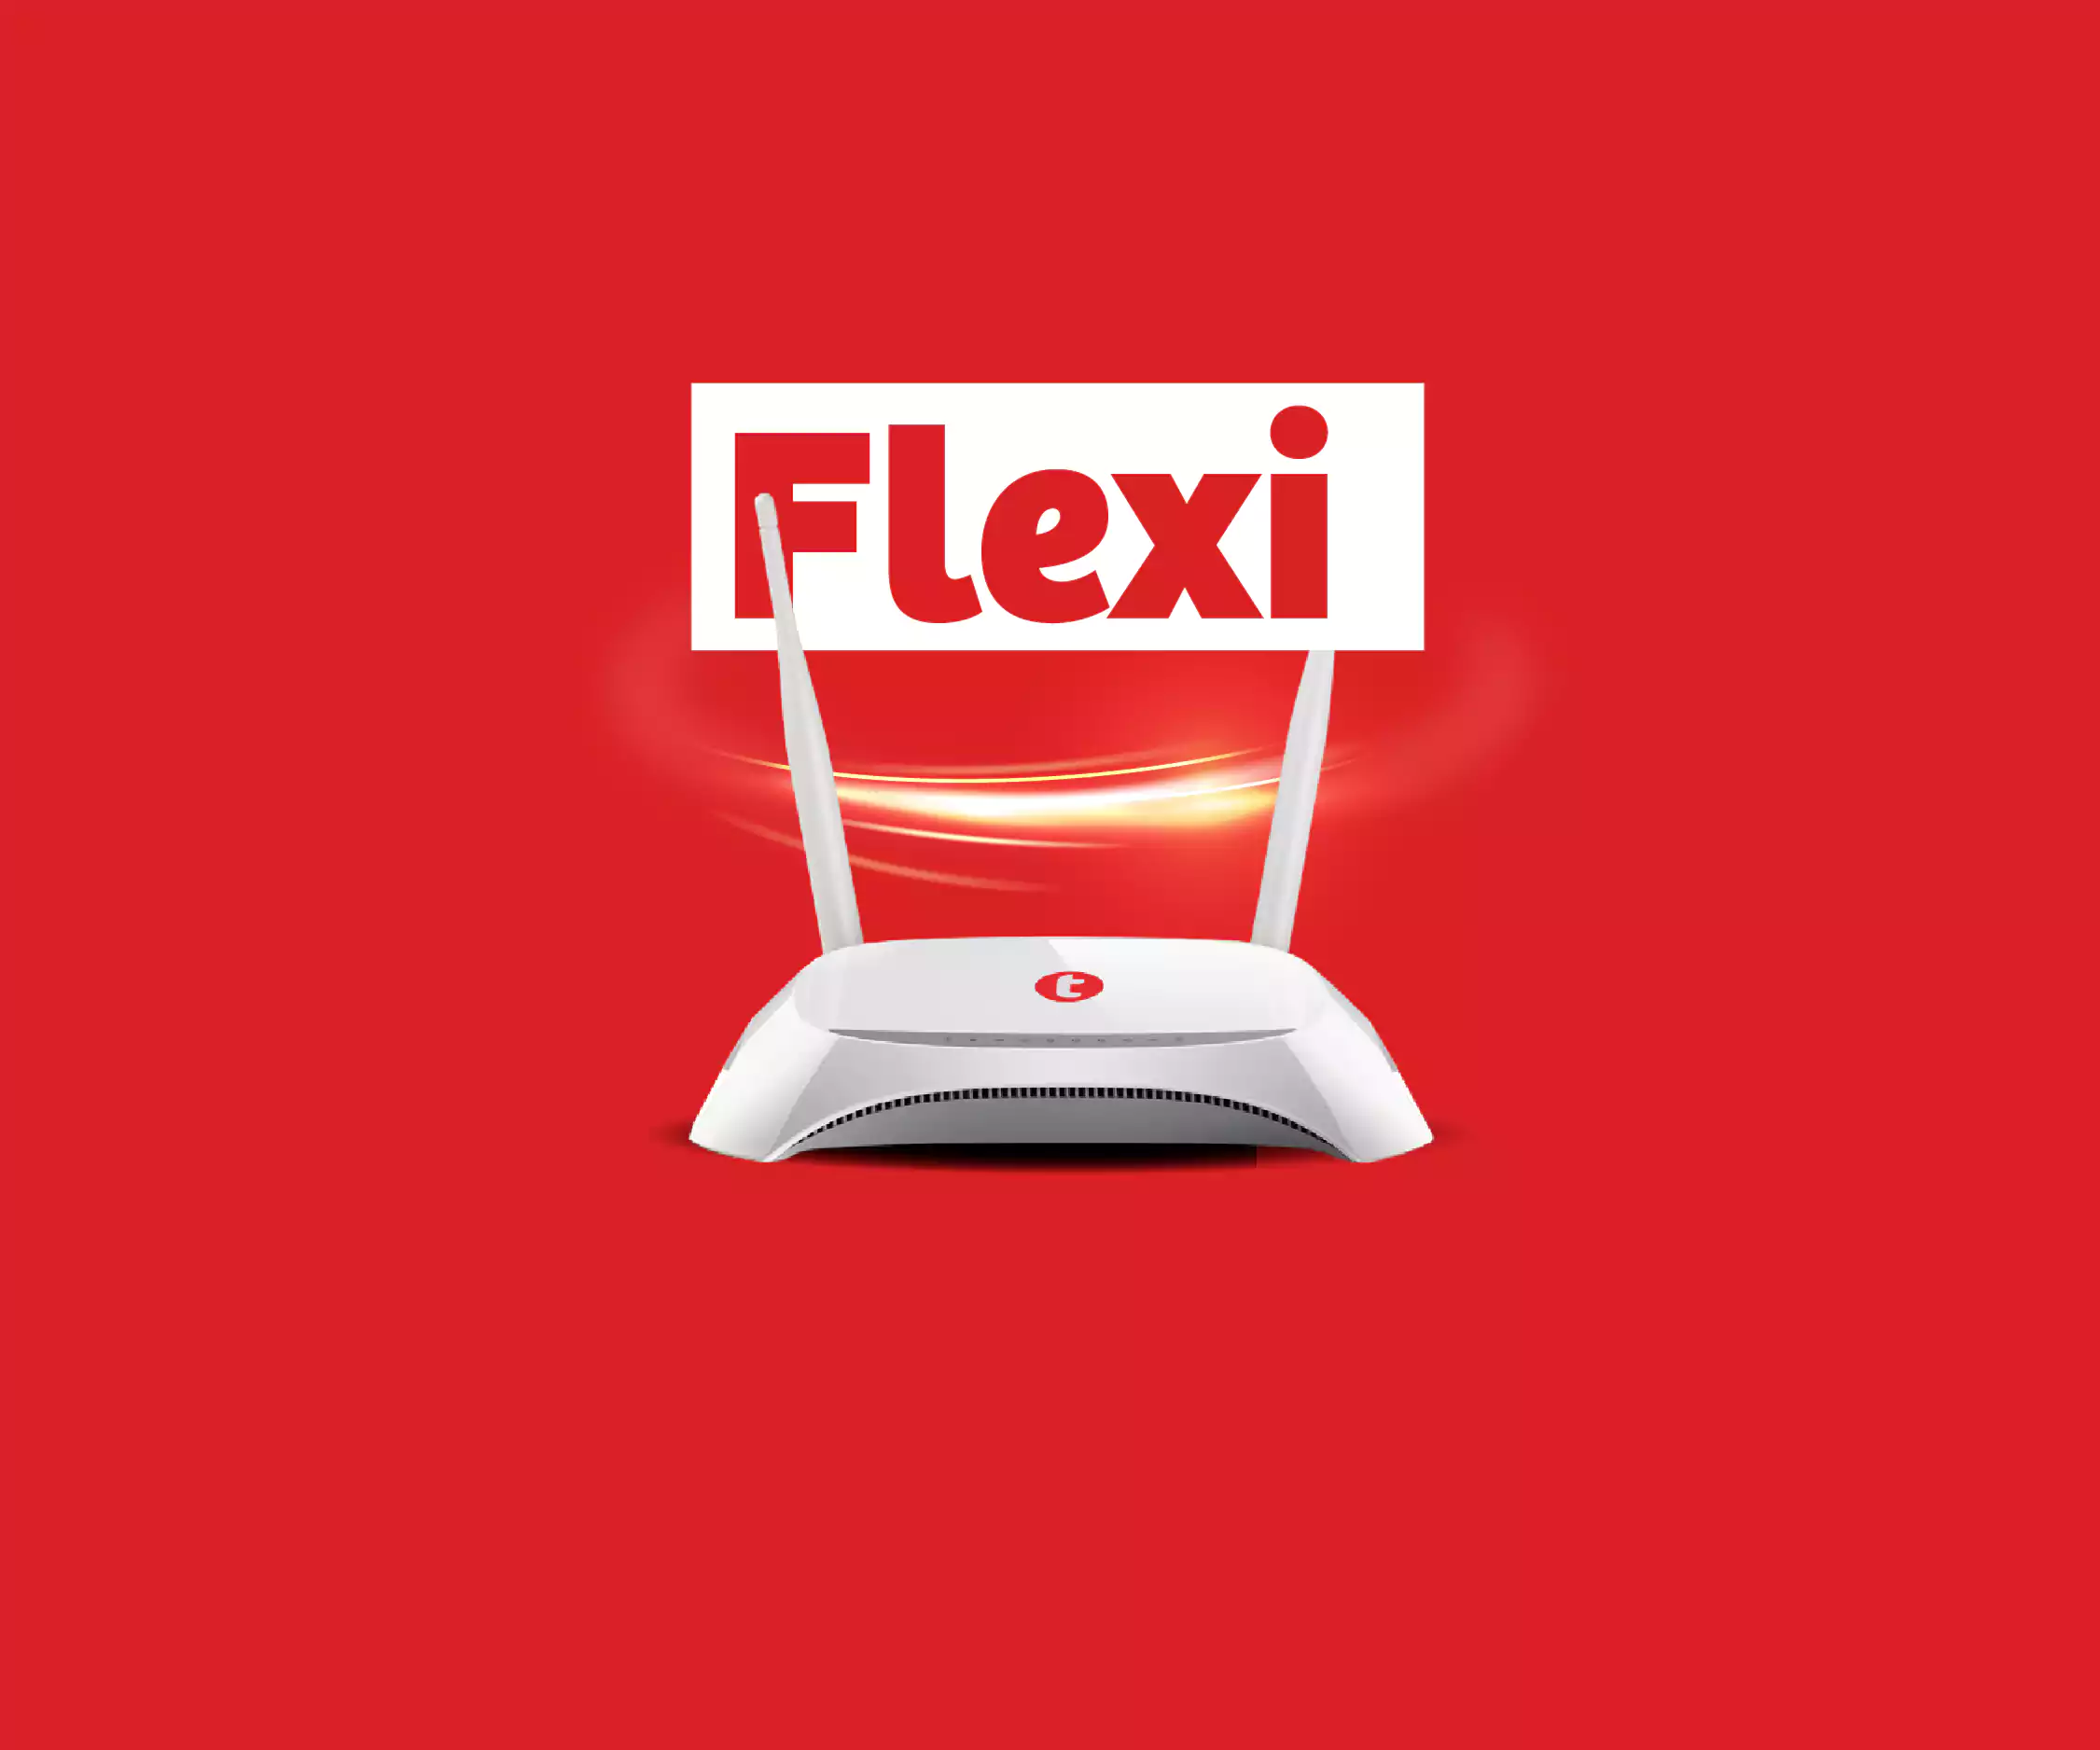 Flexi Offers